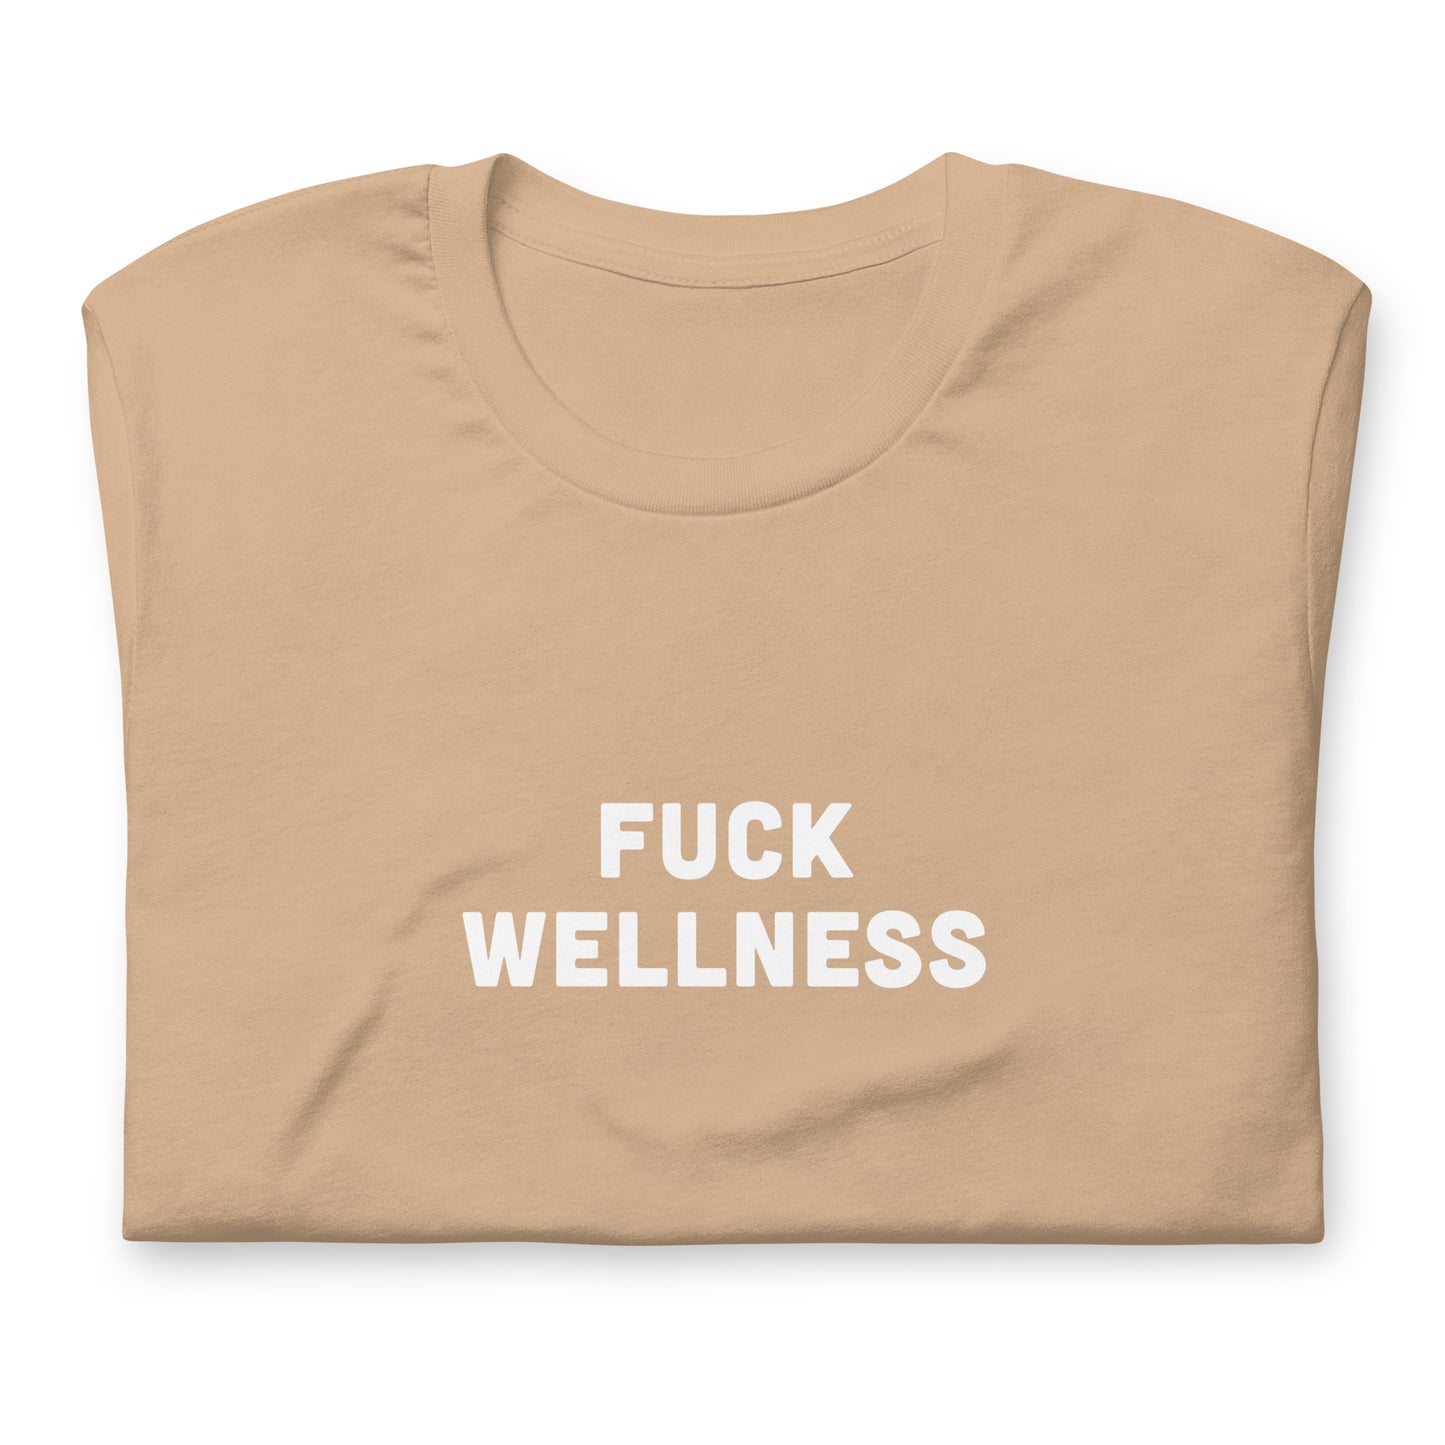 Fuck Wellness T-Shirt Size 2XL Color Forest